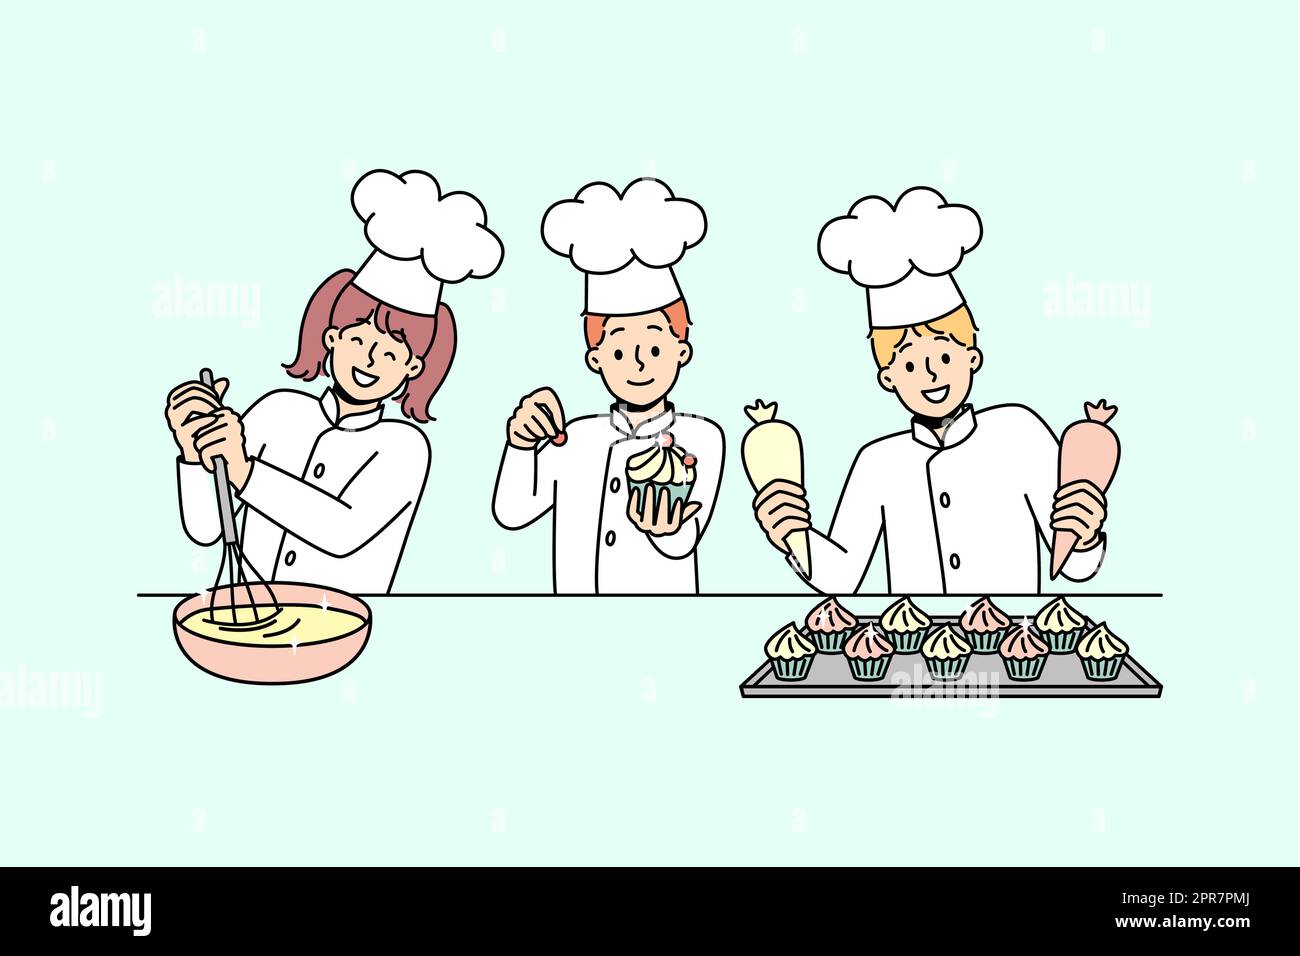 https://c8.alamy.com/comp/2PR7PMJ/little-kids-cooks-have-fun-baking-together-smiling-small-children-in-uniforms-cooking-preparing-desserts-at-kitchen-workshop-or-future-profession-v-2PR7PMJ.jpg